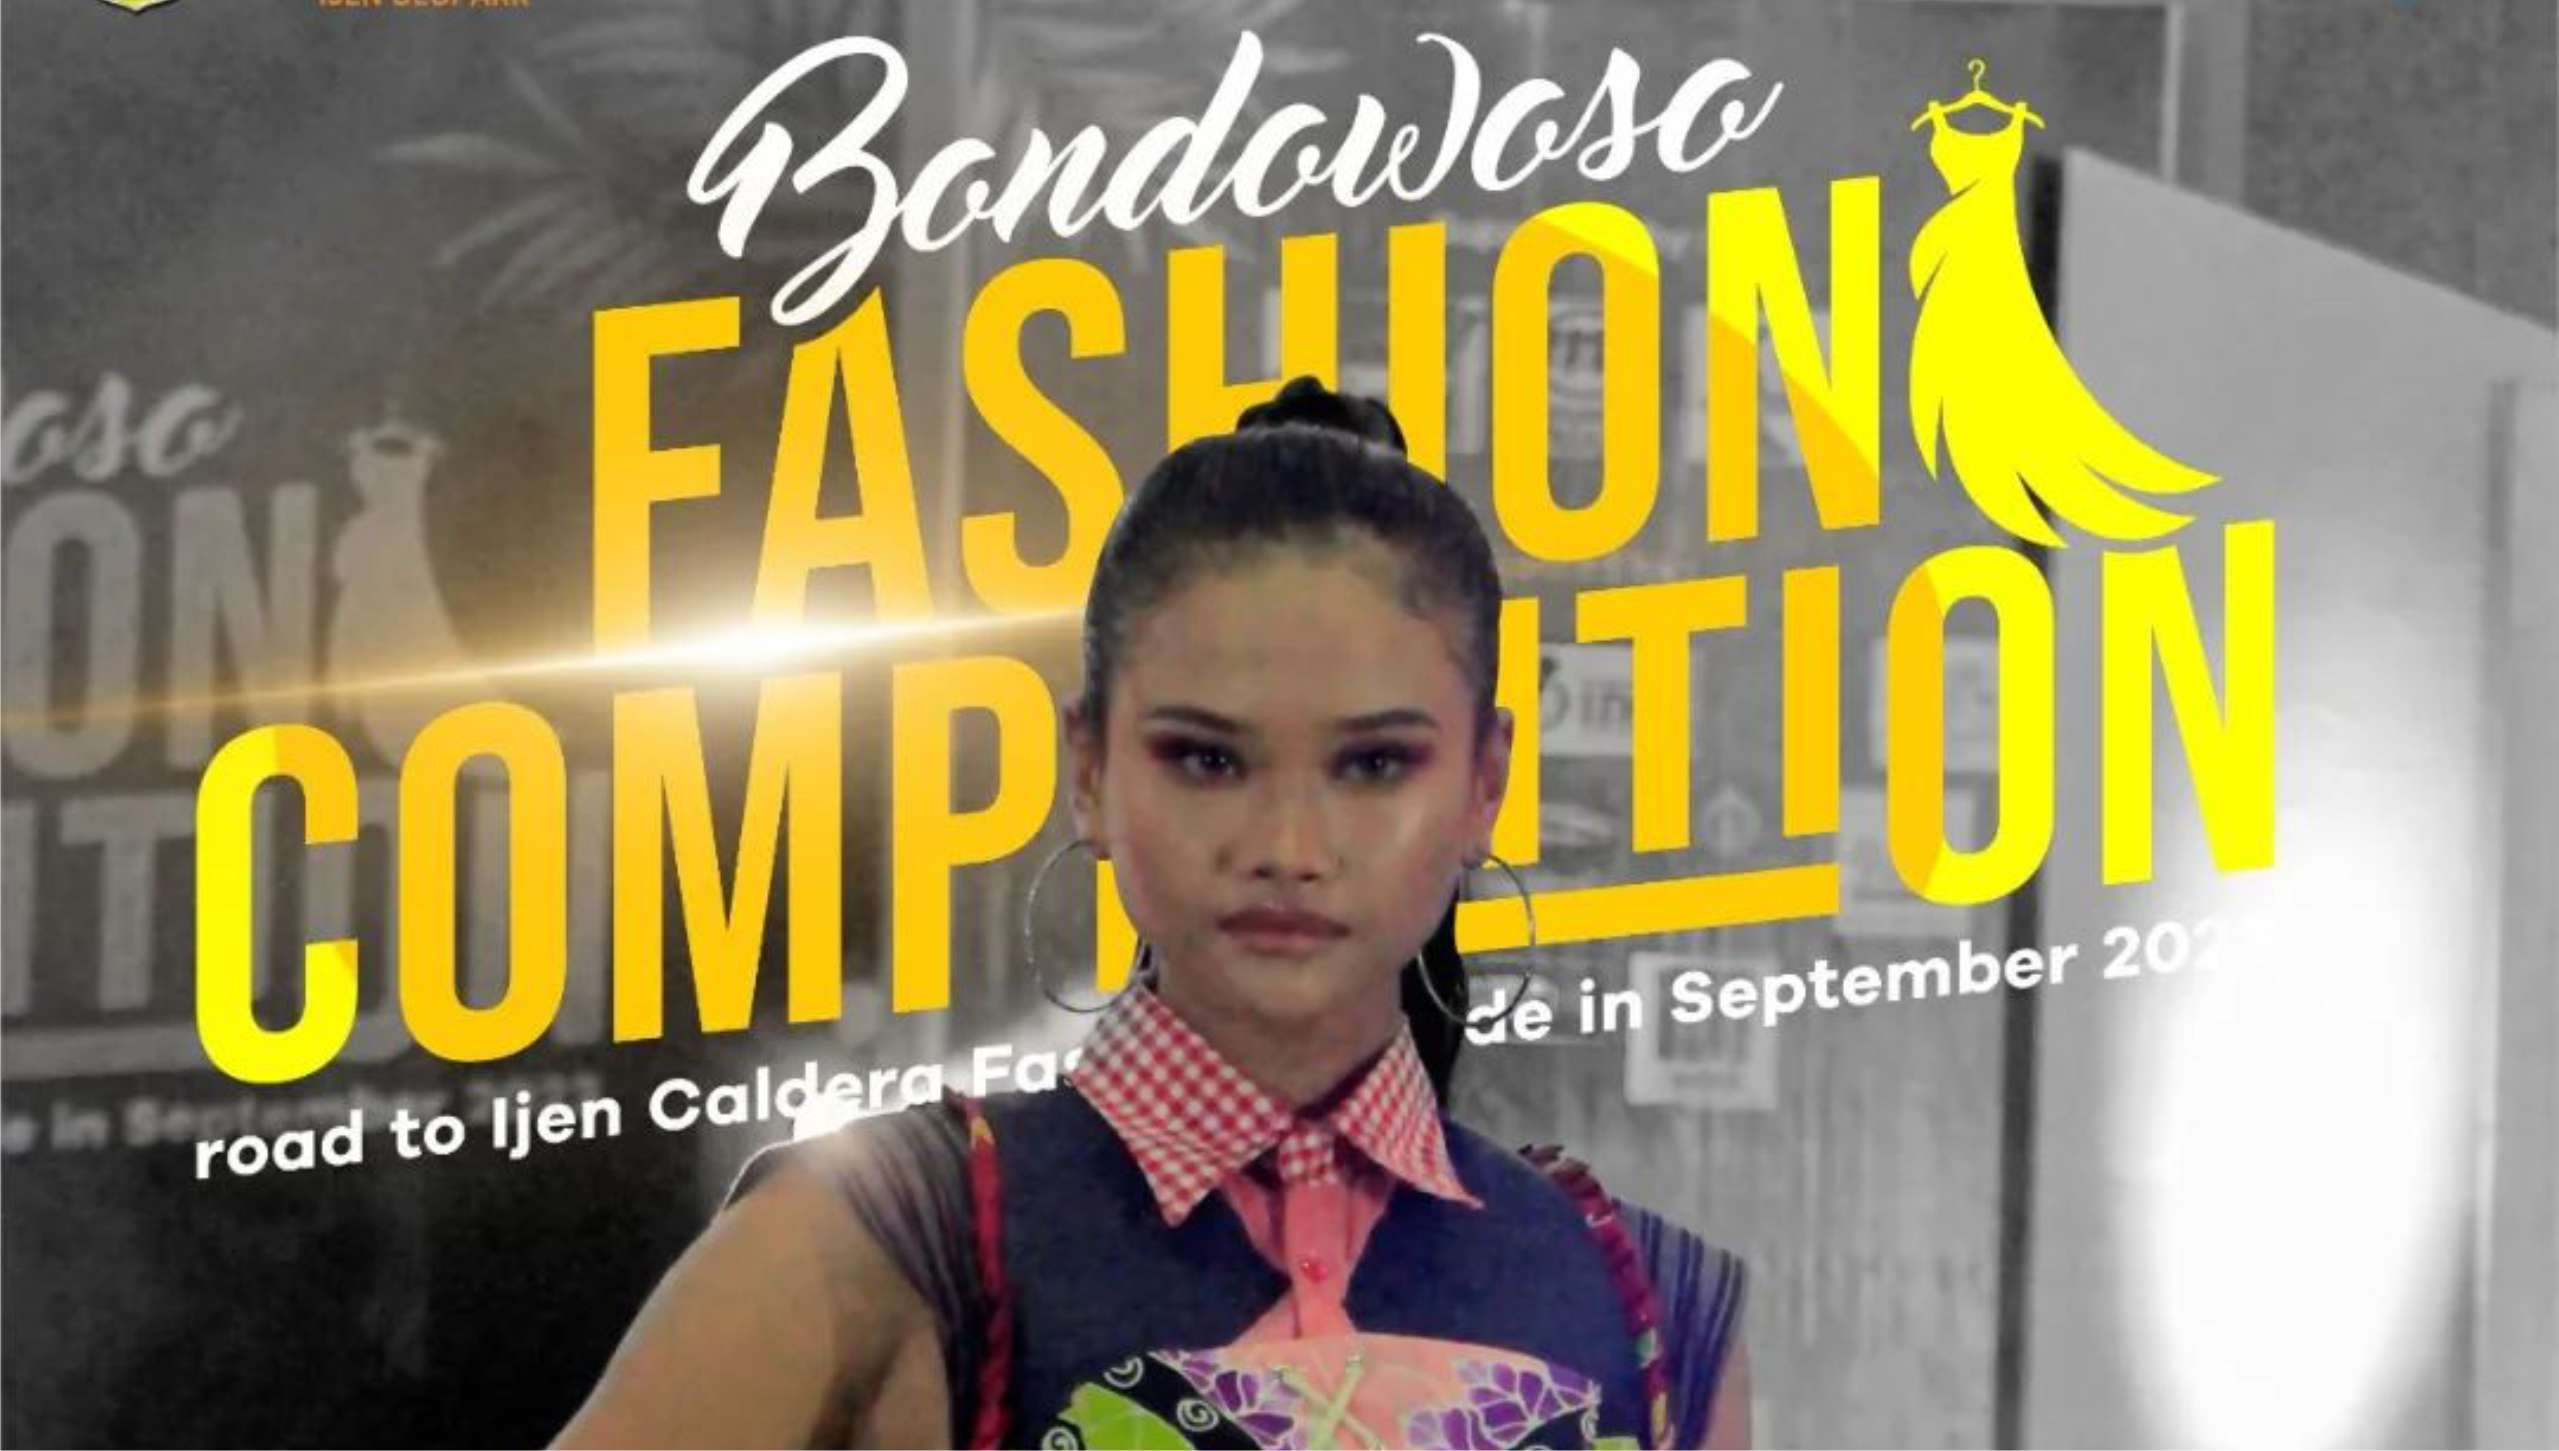 Bondowoso Fashion Competition - BONDOWOSOTOURISM